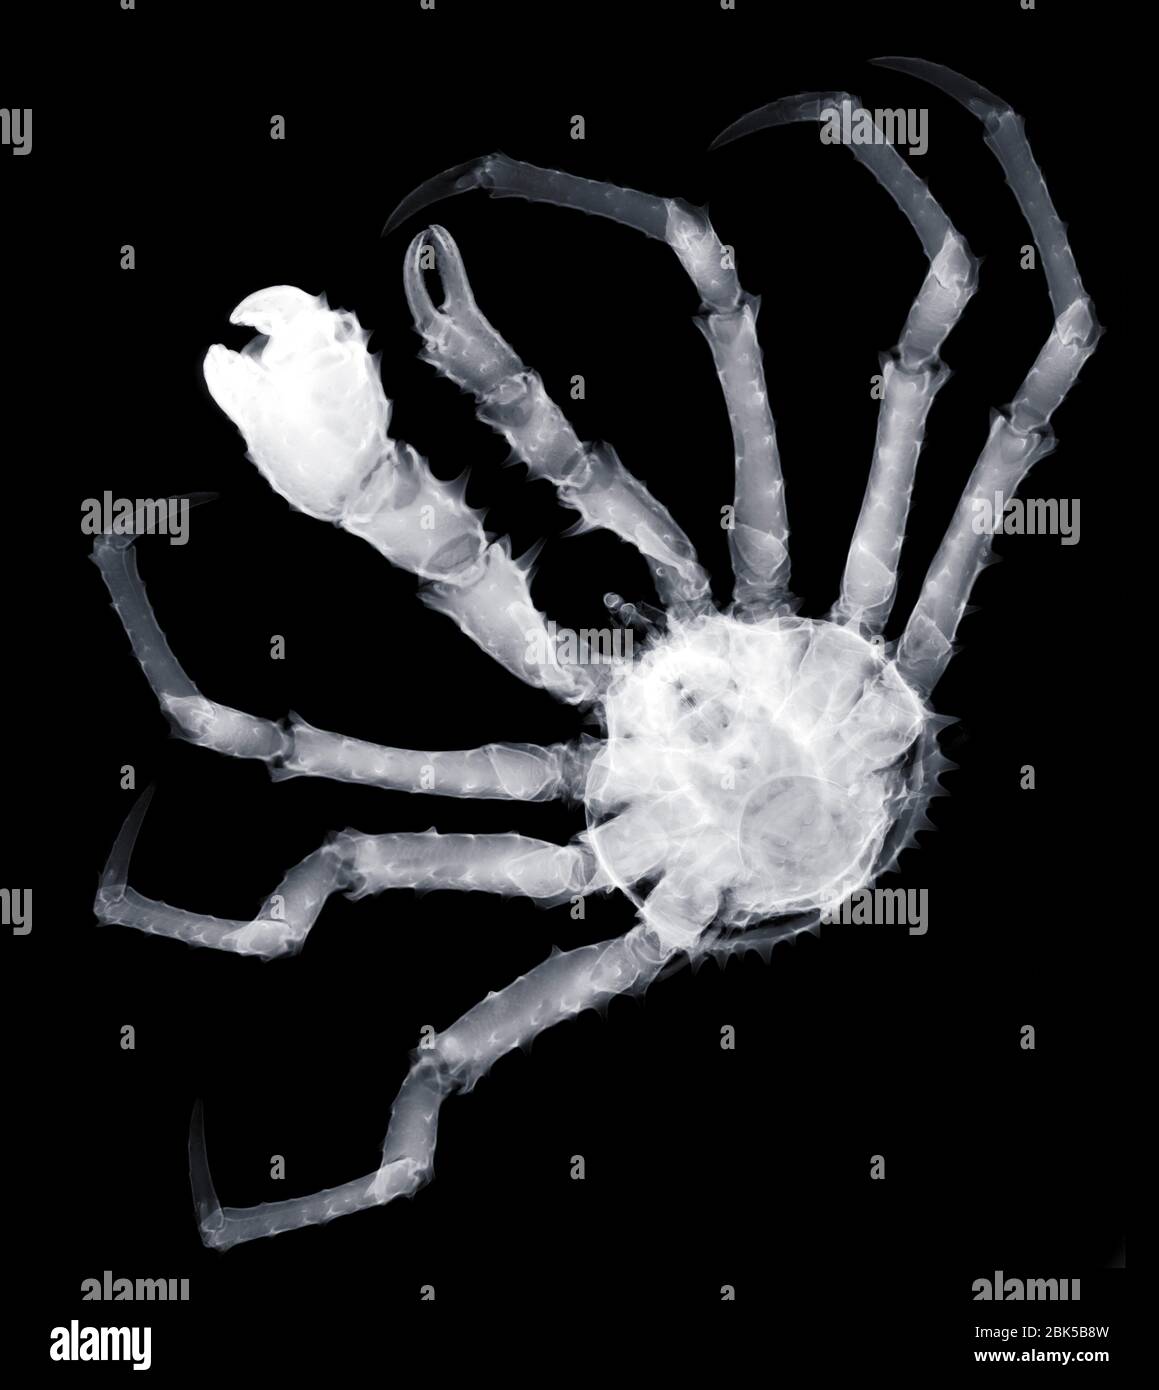 Spider crab (Maja squinado), X-ray. Stock Photo